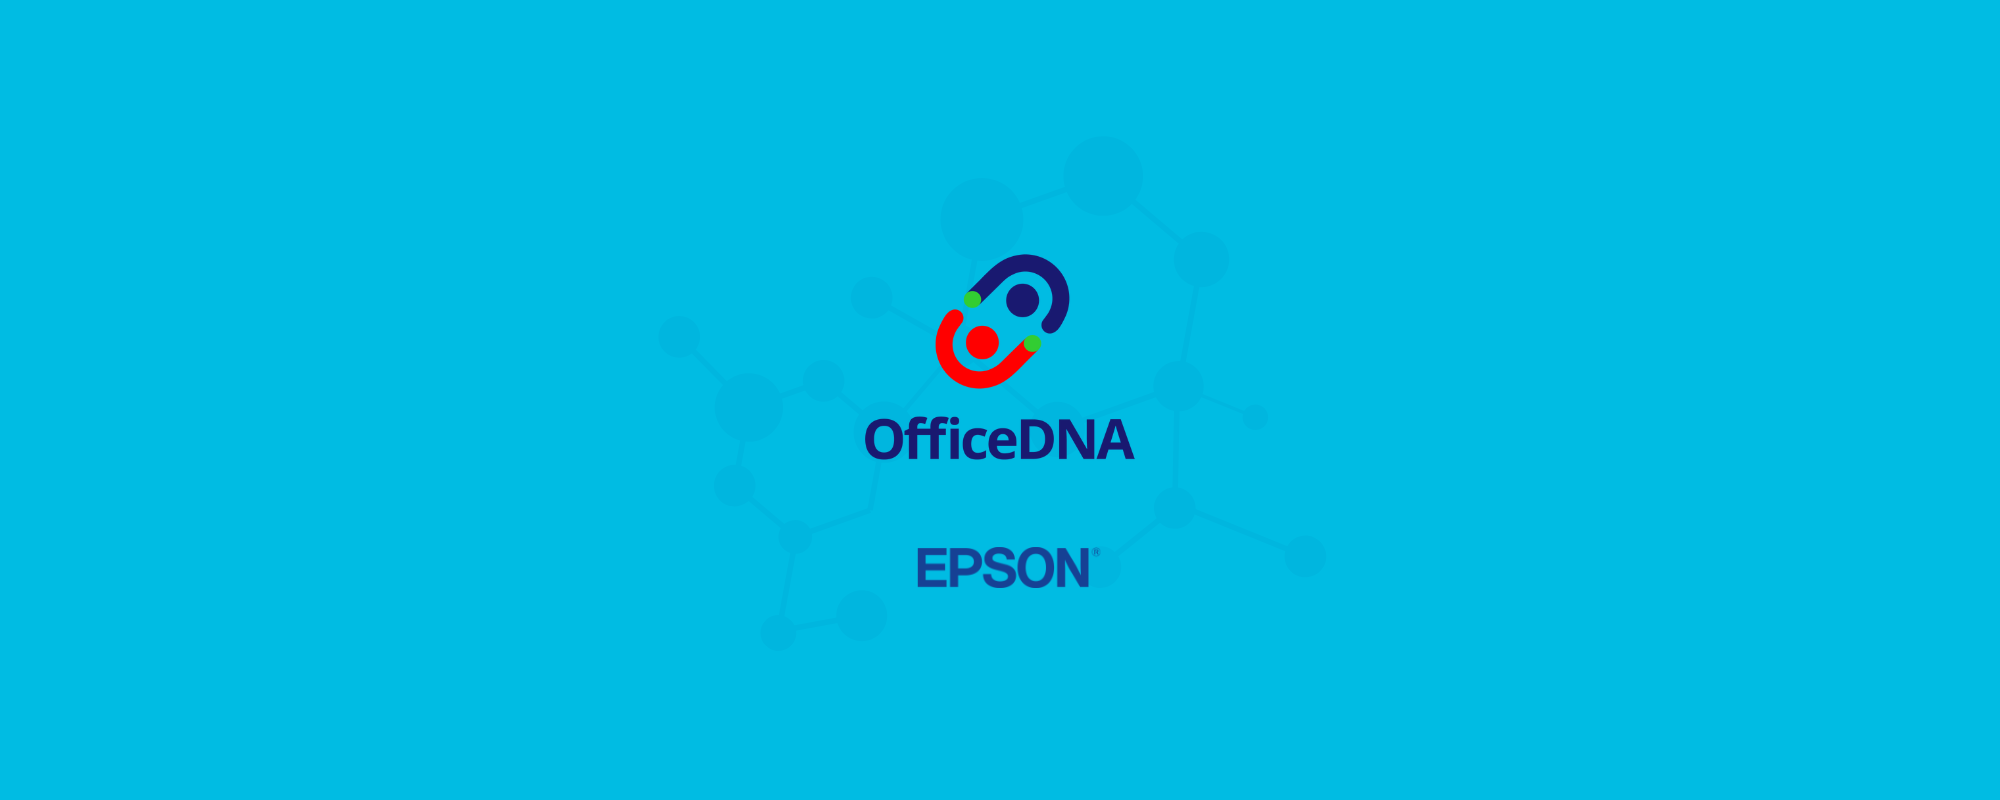 Epson Logo Black and White (1) – Brands Logos